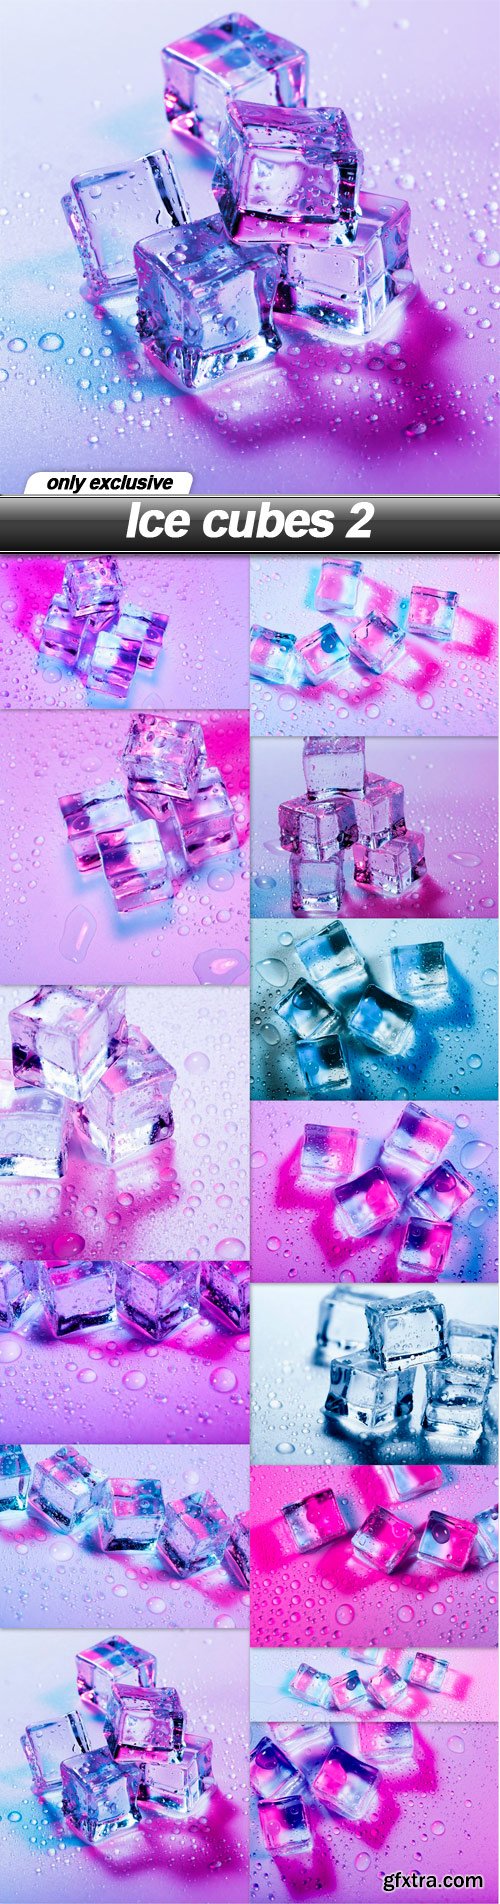 Ice cubes 2 - 14 UHQ JPEG